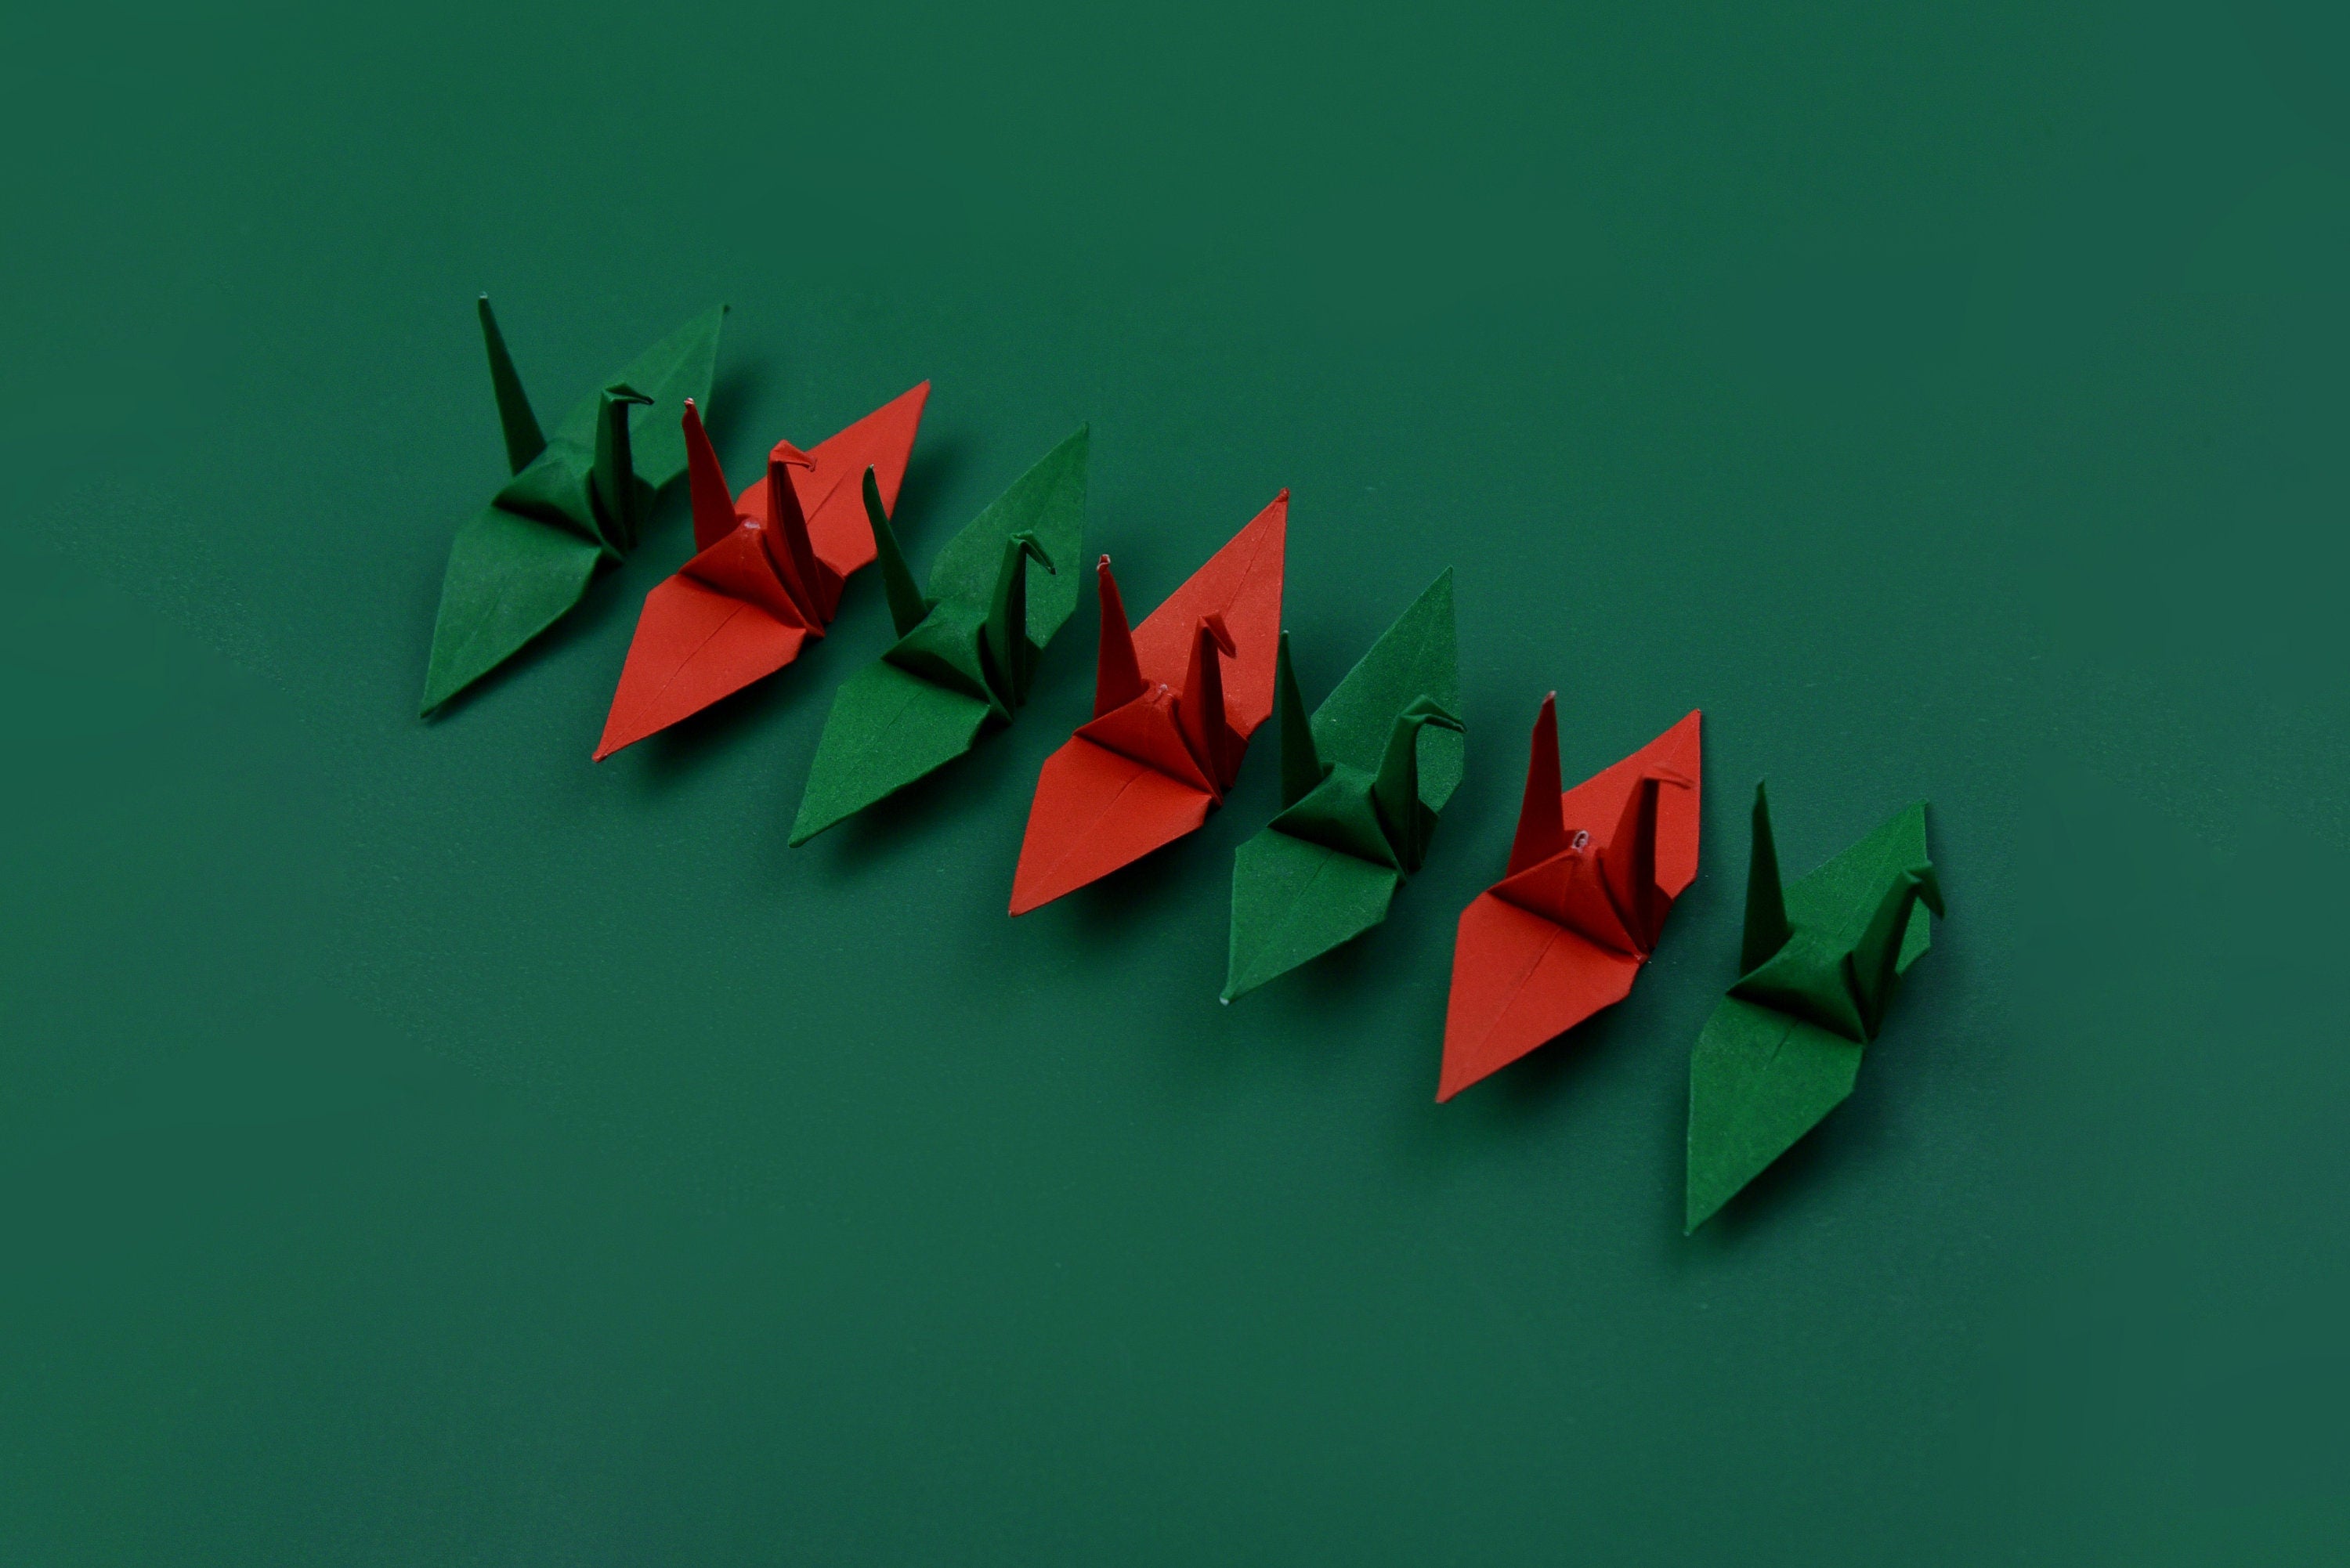 1000 gru di carta origami - rosso verde - 7,5 cm (3x3 pollici) - ornamento gru origami, regalo di nozze, Natale